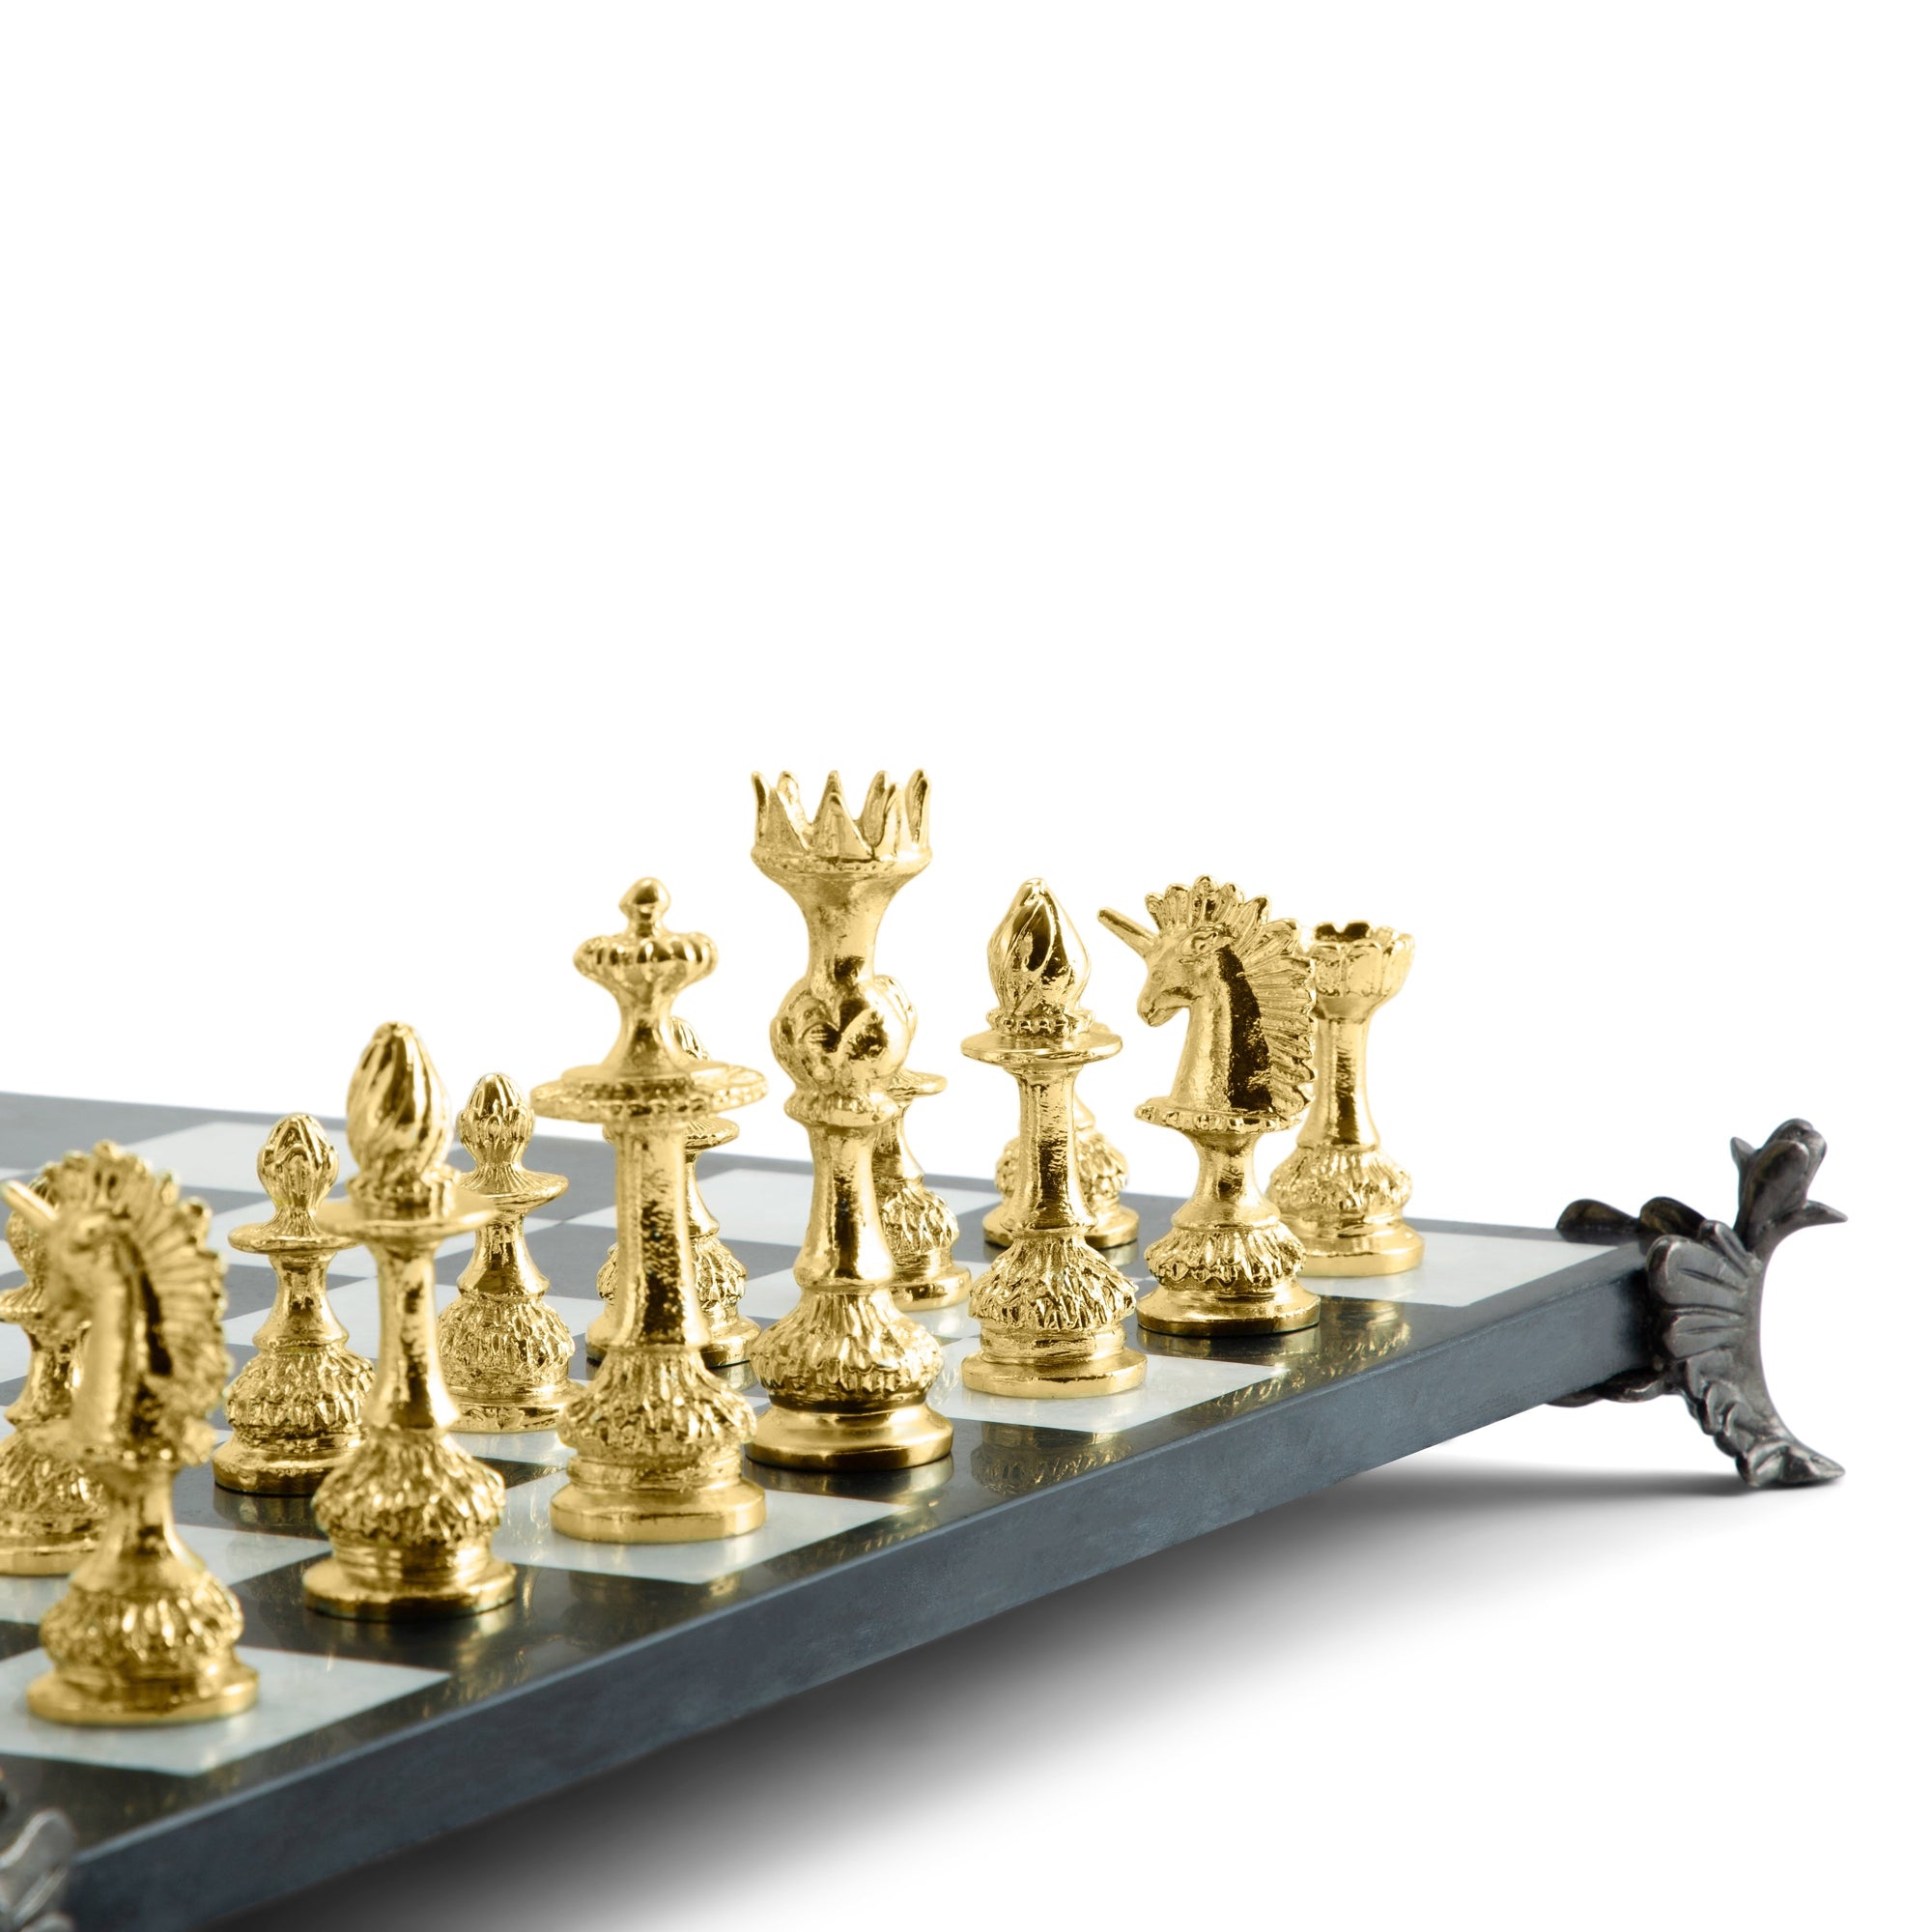 Michael Aram Chess Set